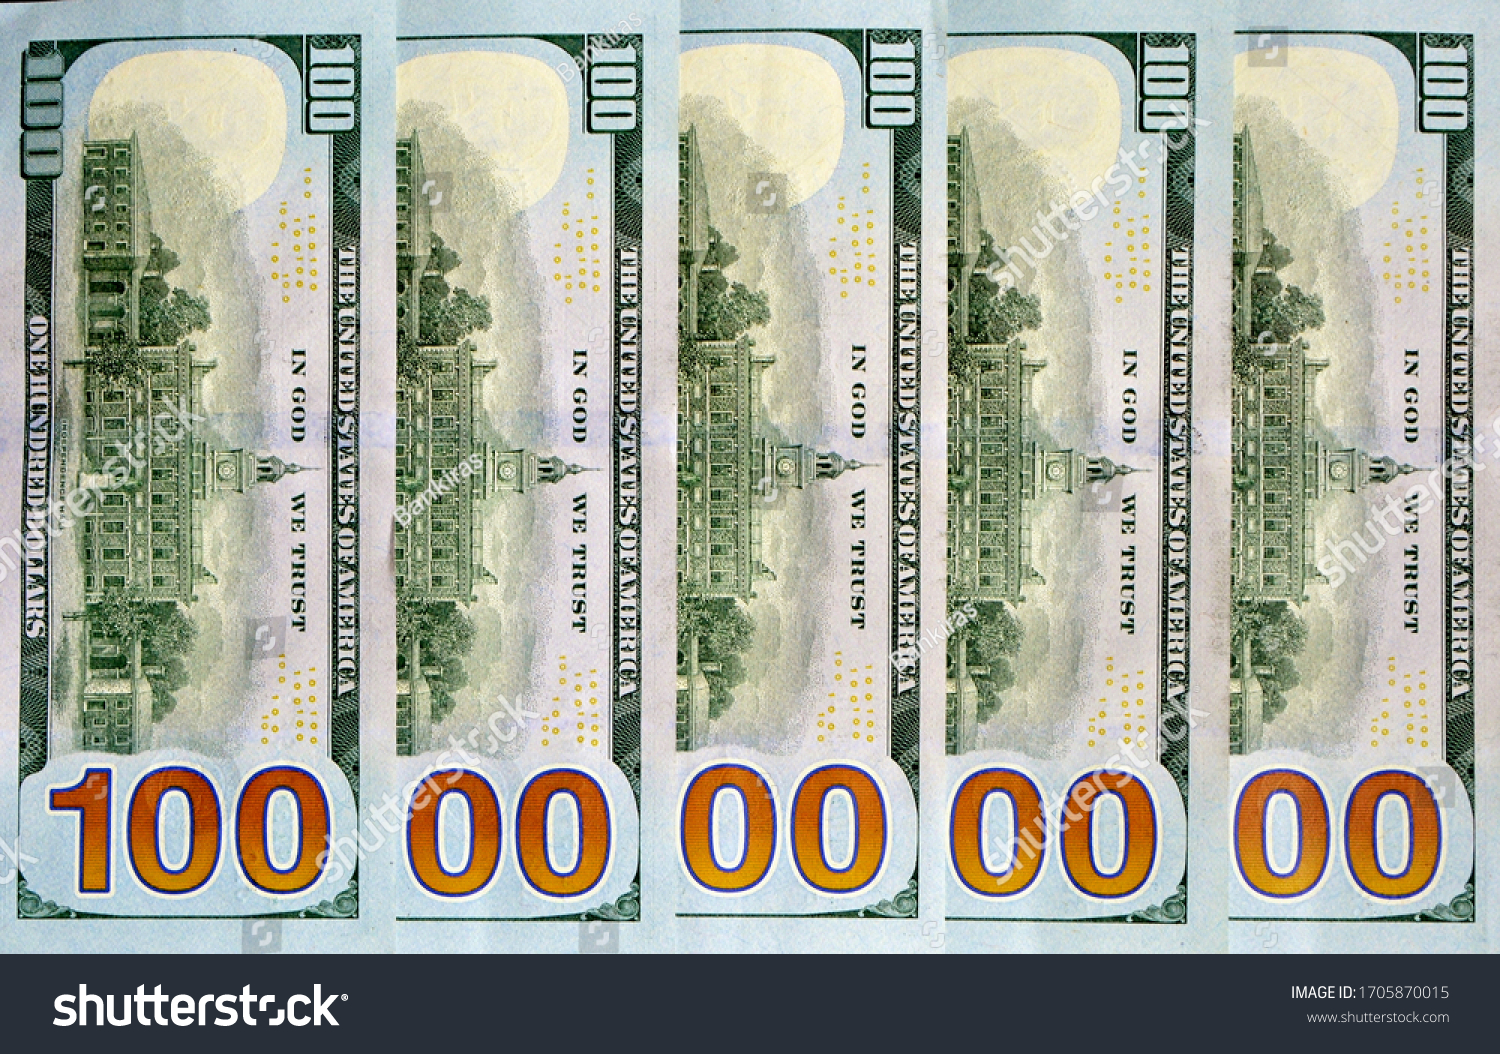 Hundred-dollar bills arranged in a row close-up.The 10 zeros on the bills symbolize 10 billion dollars #1705870015